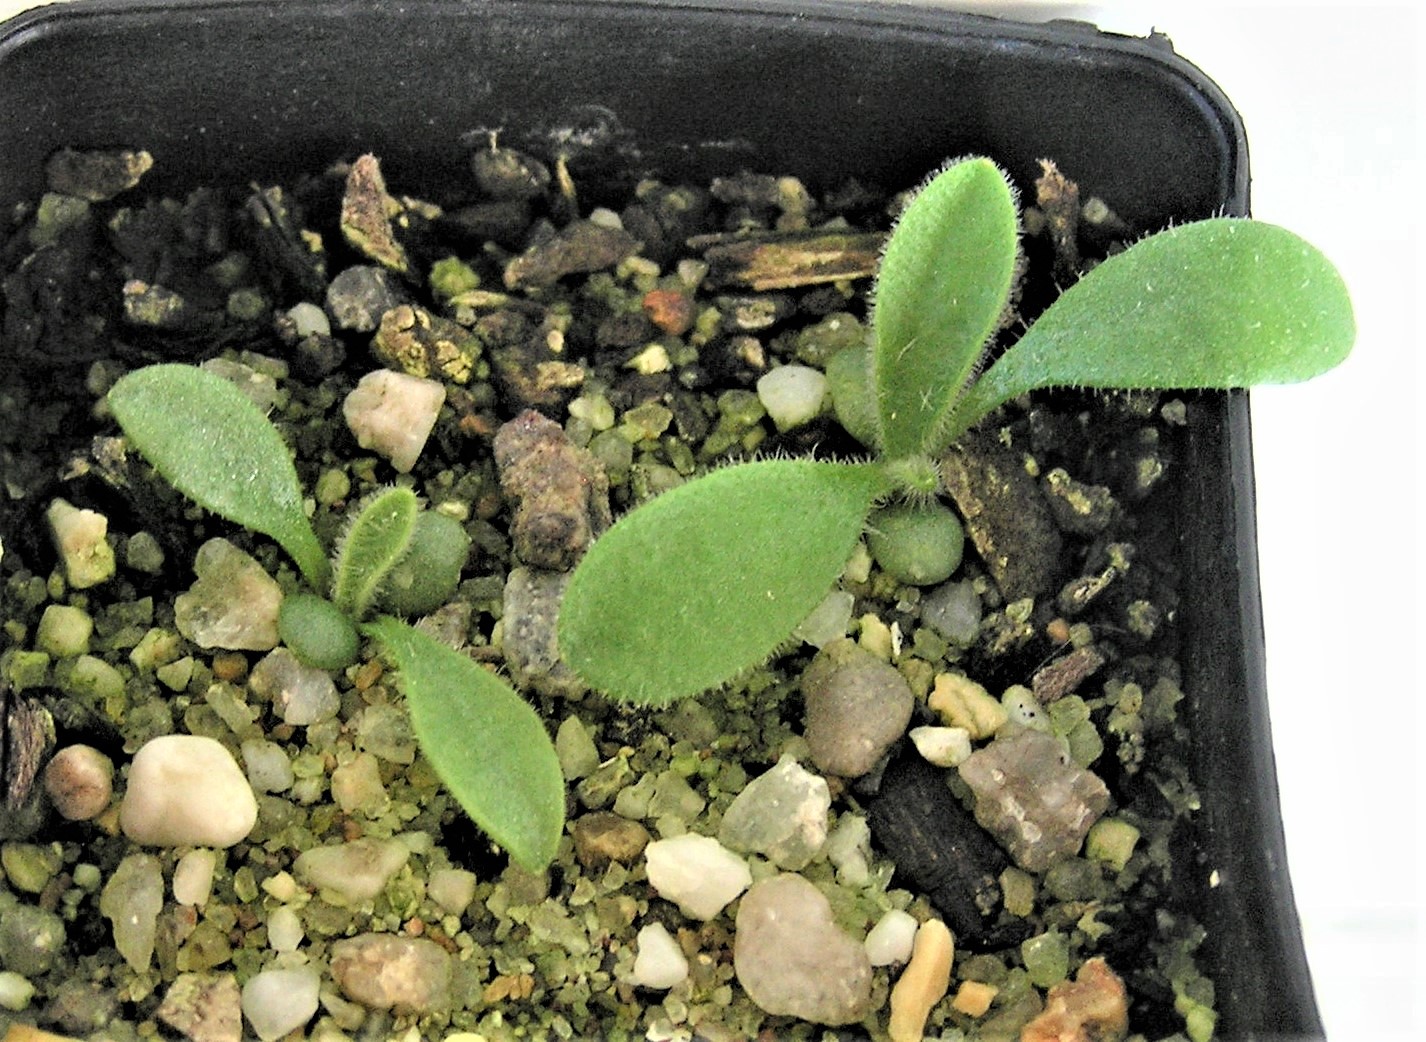 Craspedia Variabilis (Billy Buttons) at germination